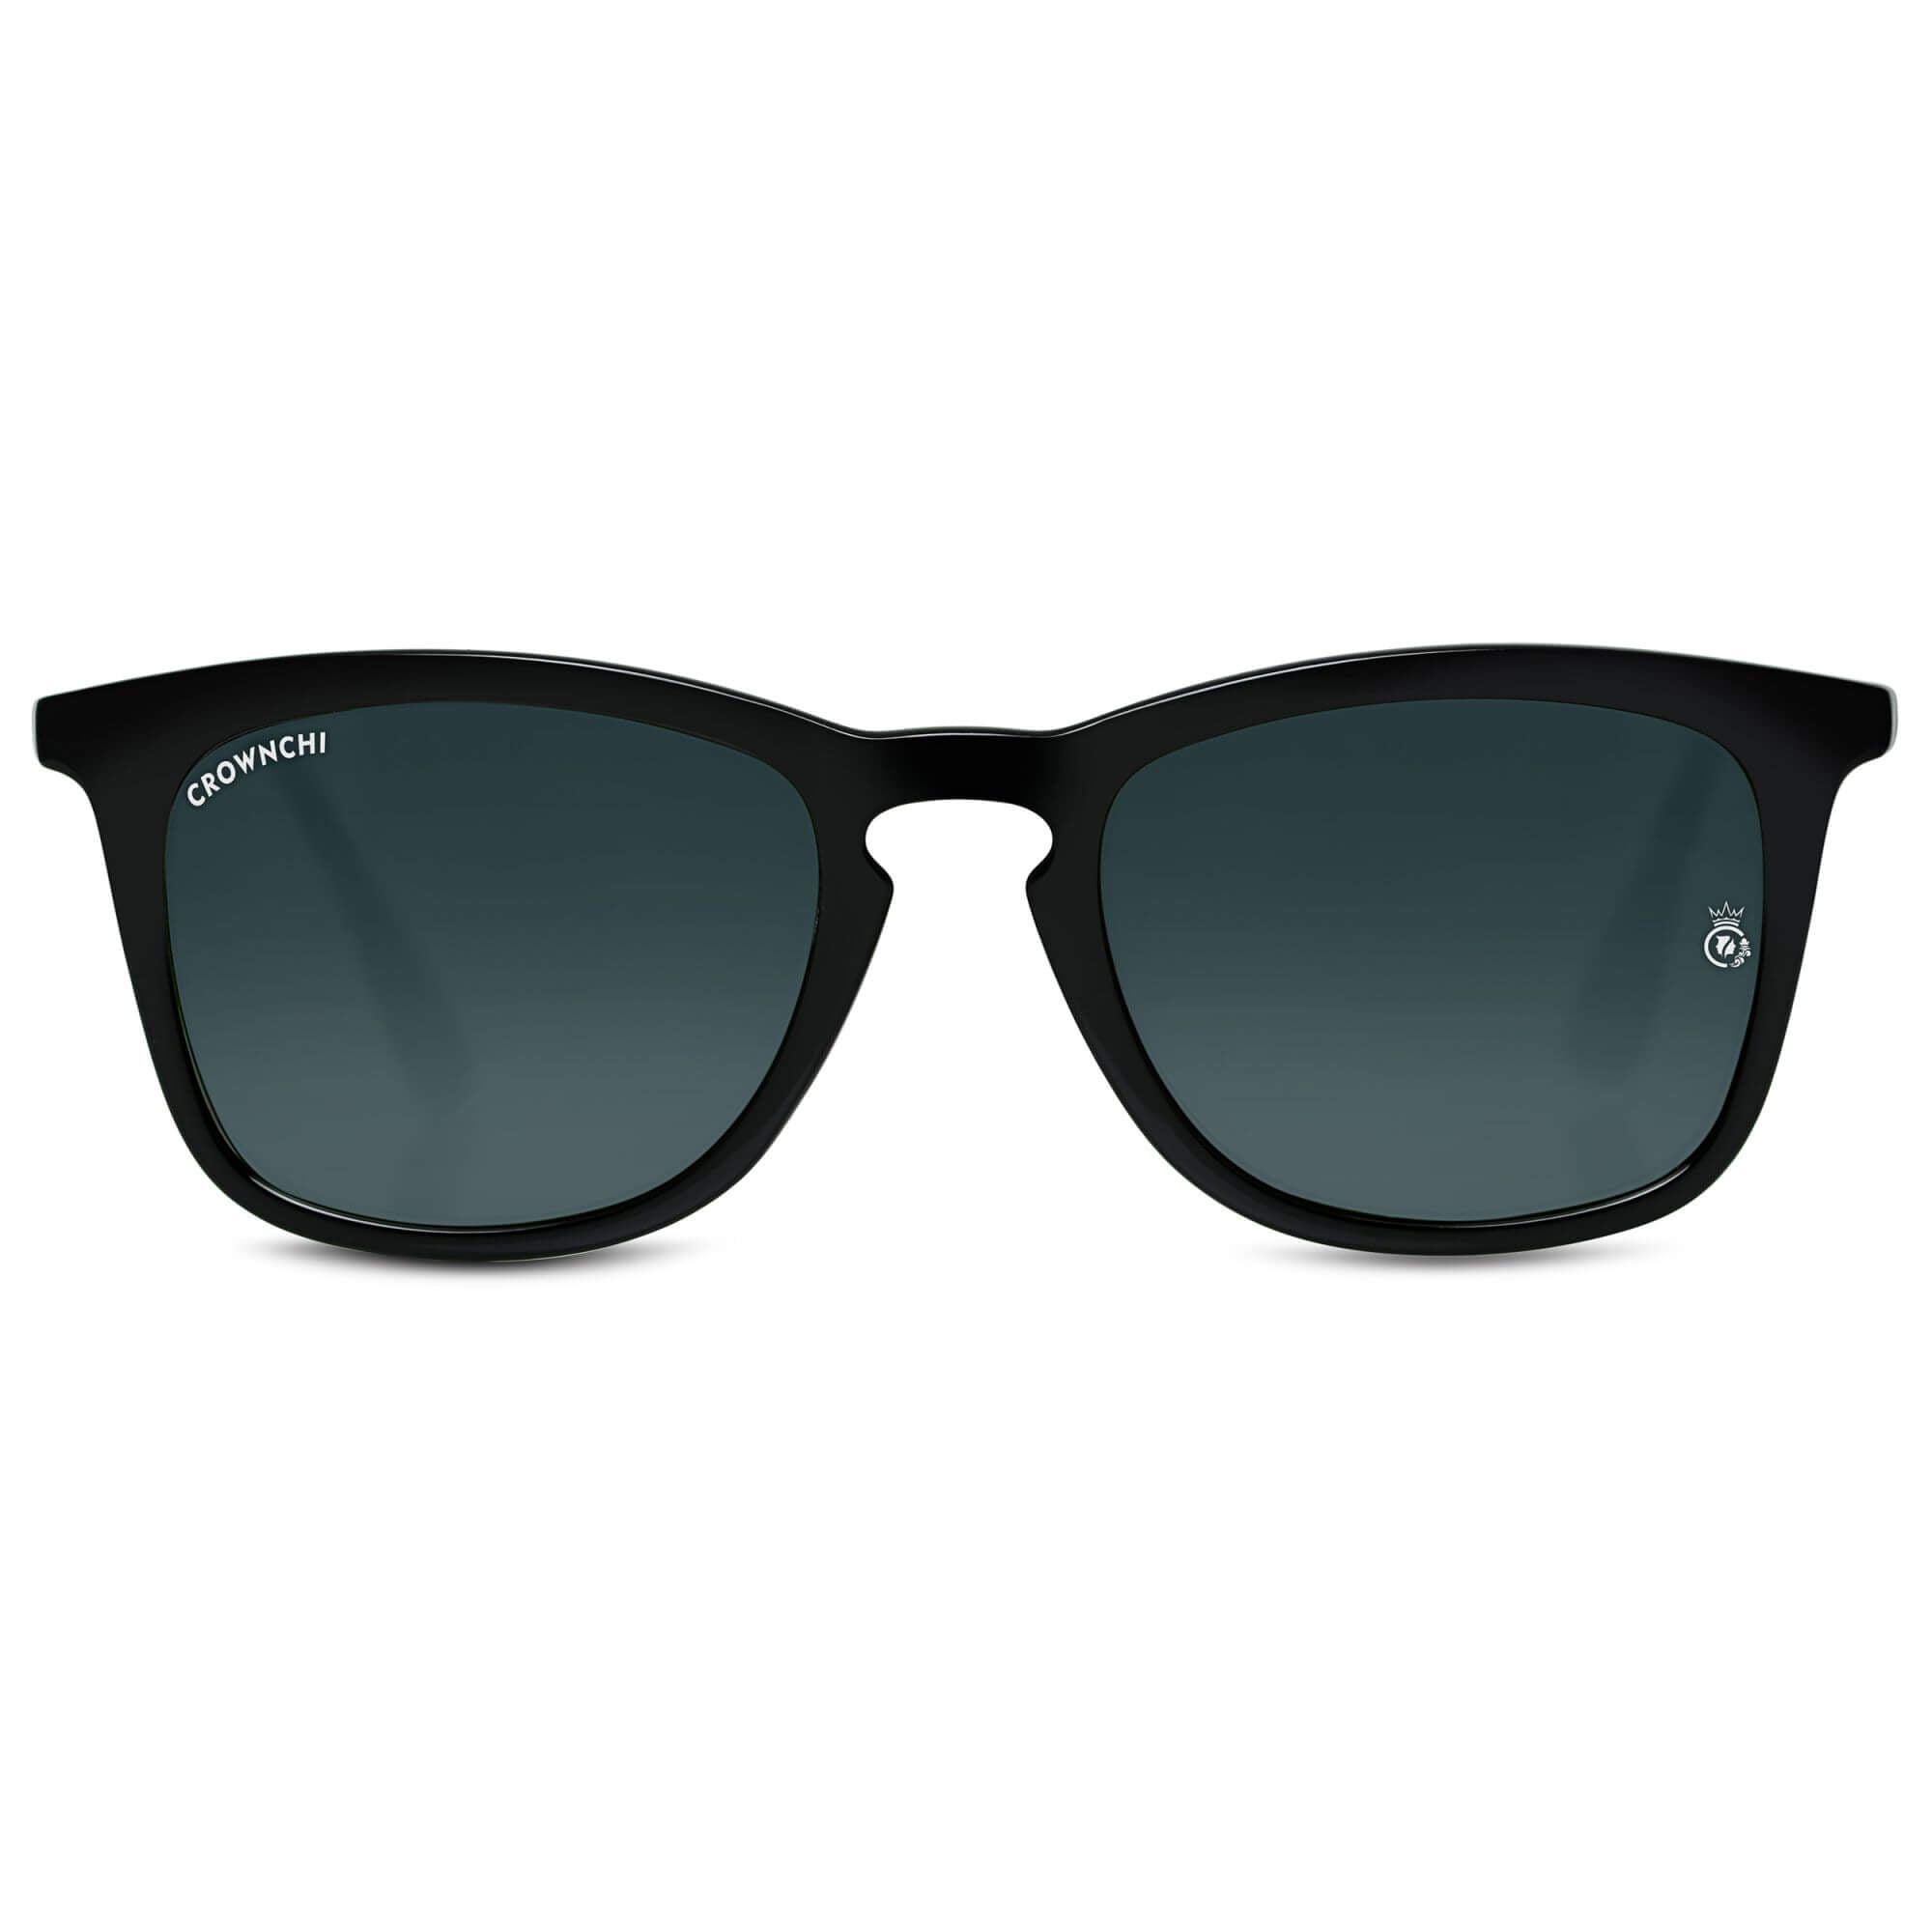 Sparrow Black Square Edition Sunglasses